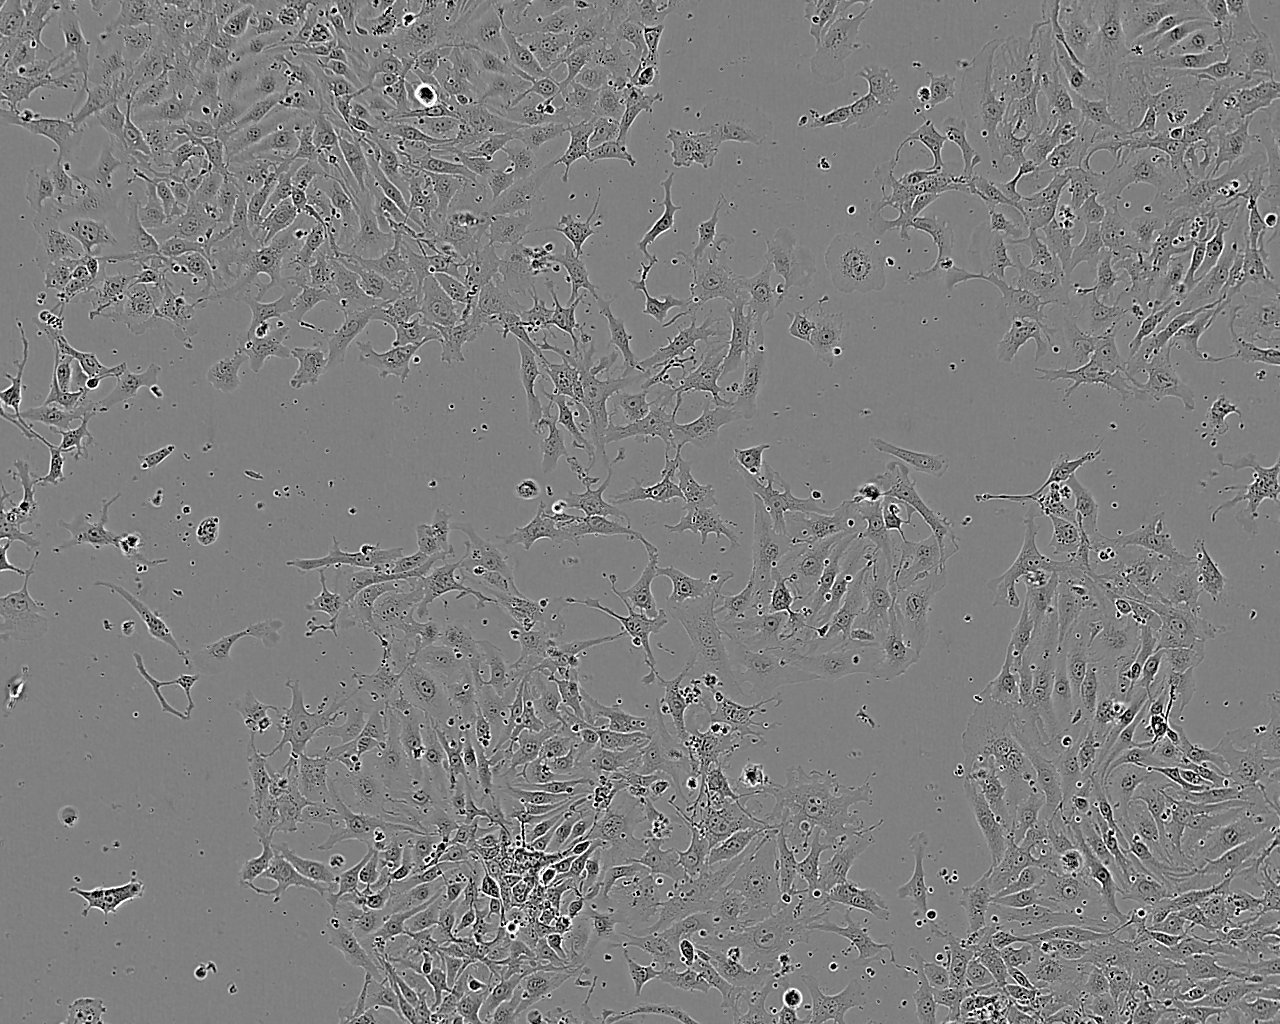 SSP-25 epithelioid cells人肝胆管癌细胞系,SSP-25 epithelioid cells